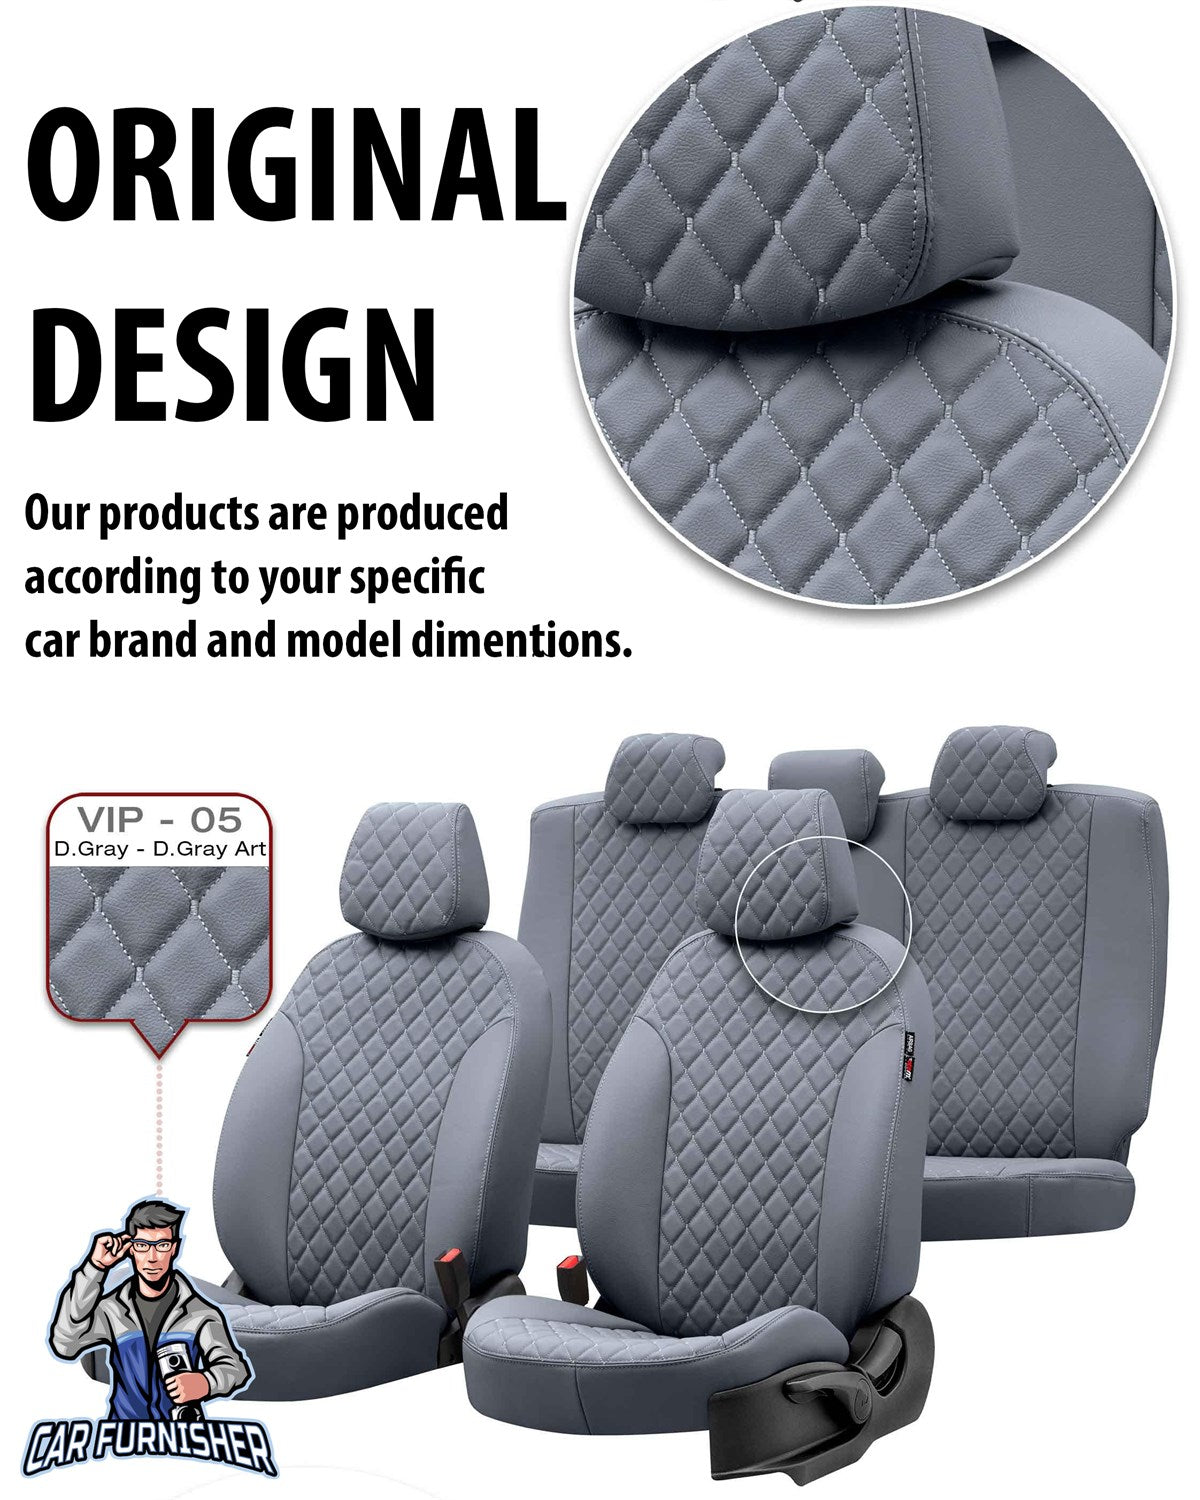 Hyundai Tucson Seat Covers Madrid Leather Design Blue Leather